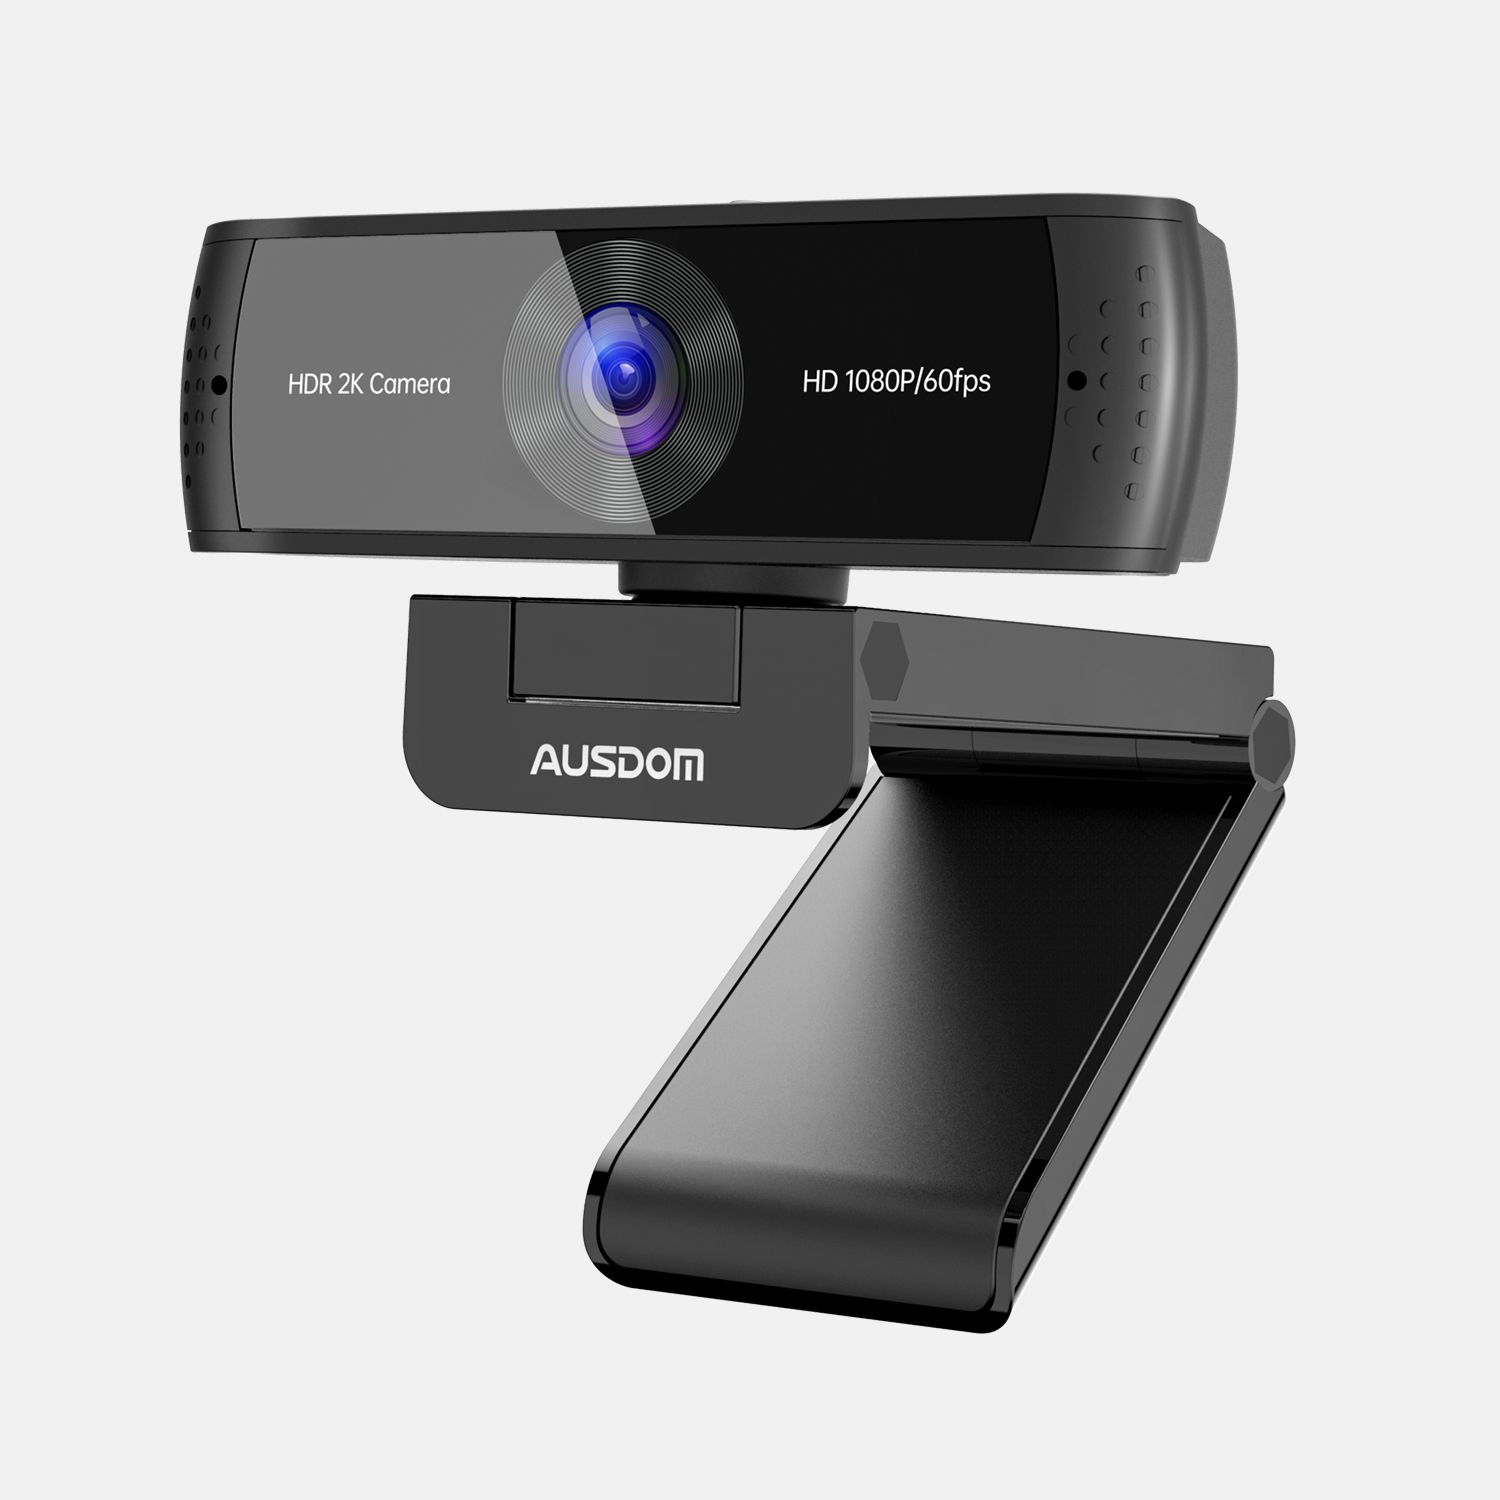 Webcam 1080p 4k Full Hd Web Camera Built-in Microphone Usb Web Cam For Pc  Computer Mac Laptop Desktop  Skype Win10